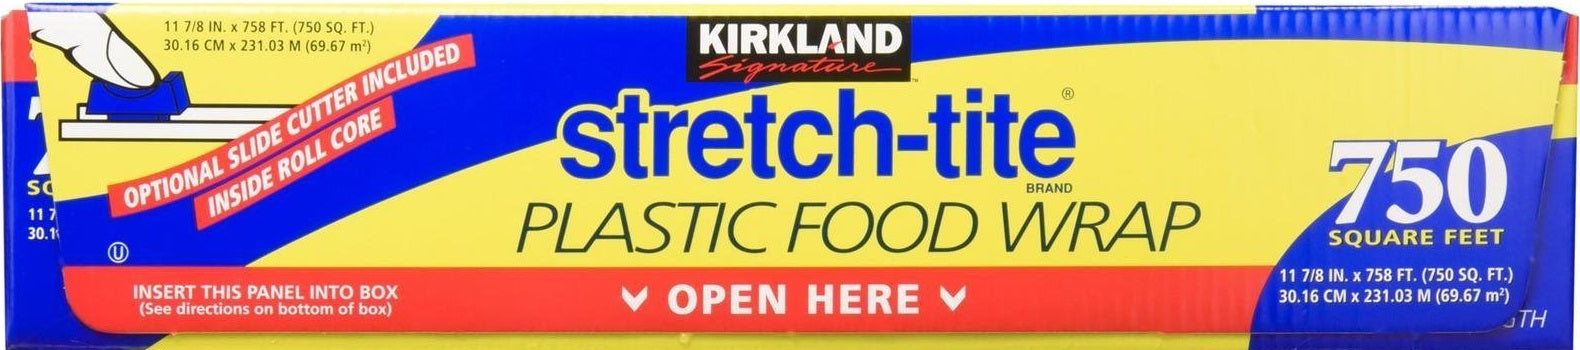 Kirkland Stretch Tite Plastic Food Wrap 750sqft